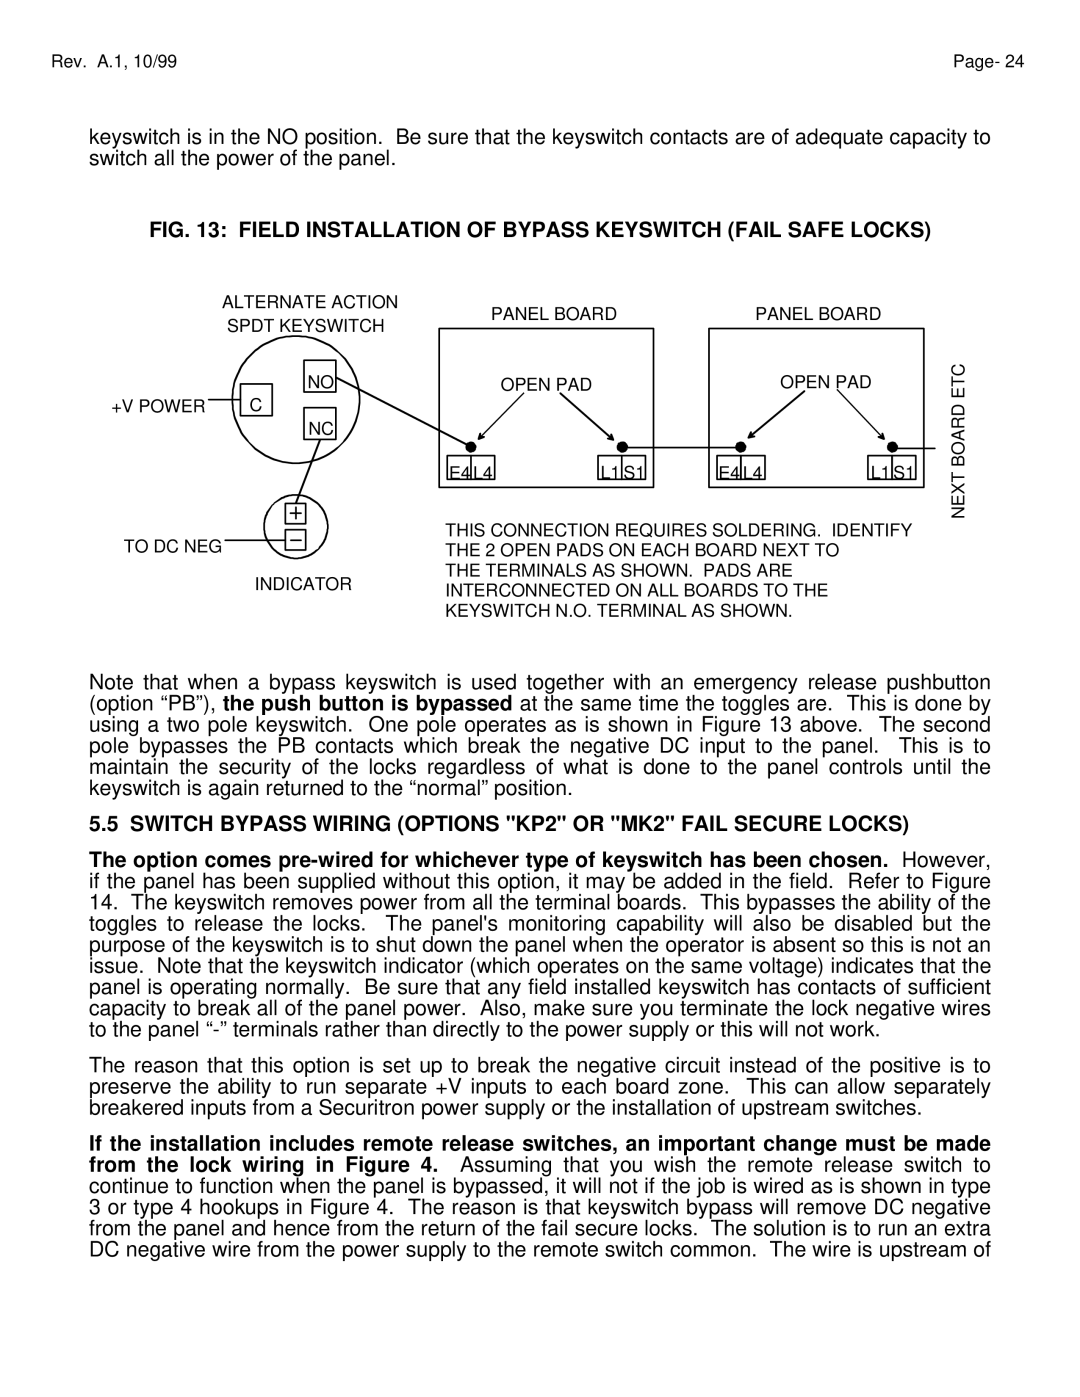 Assa ELECTRIC LOCK manual Field Installation of Bypass Keyswitch Fail Safe Locks 